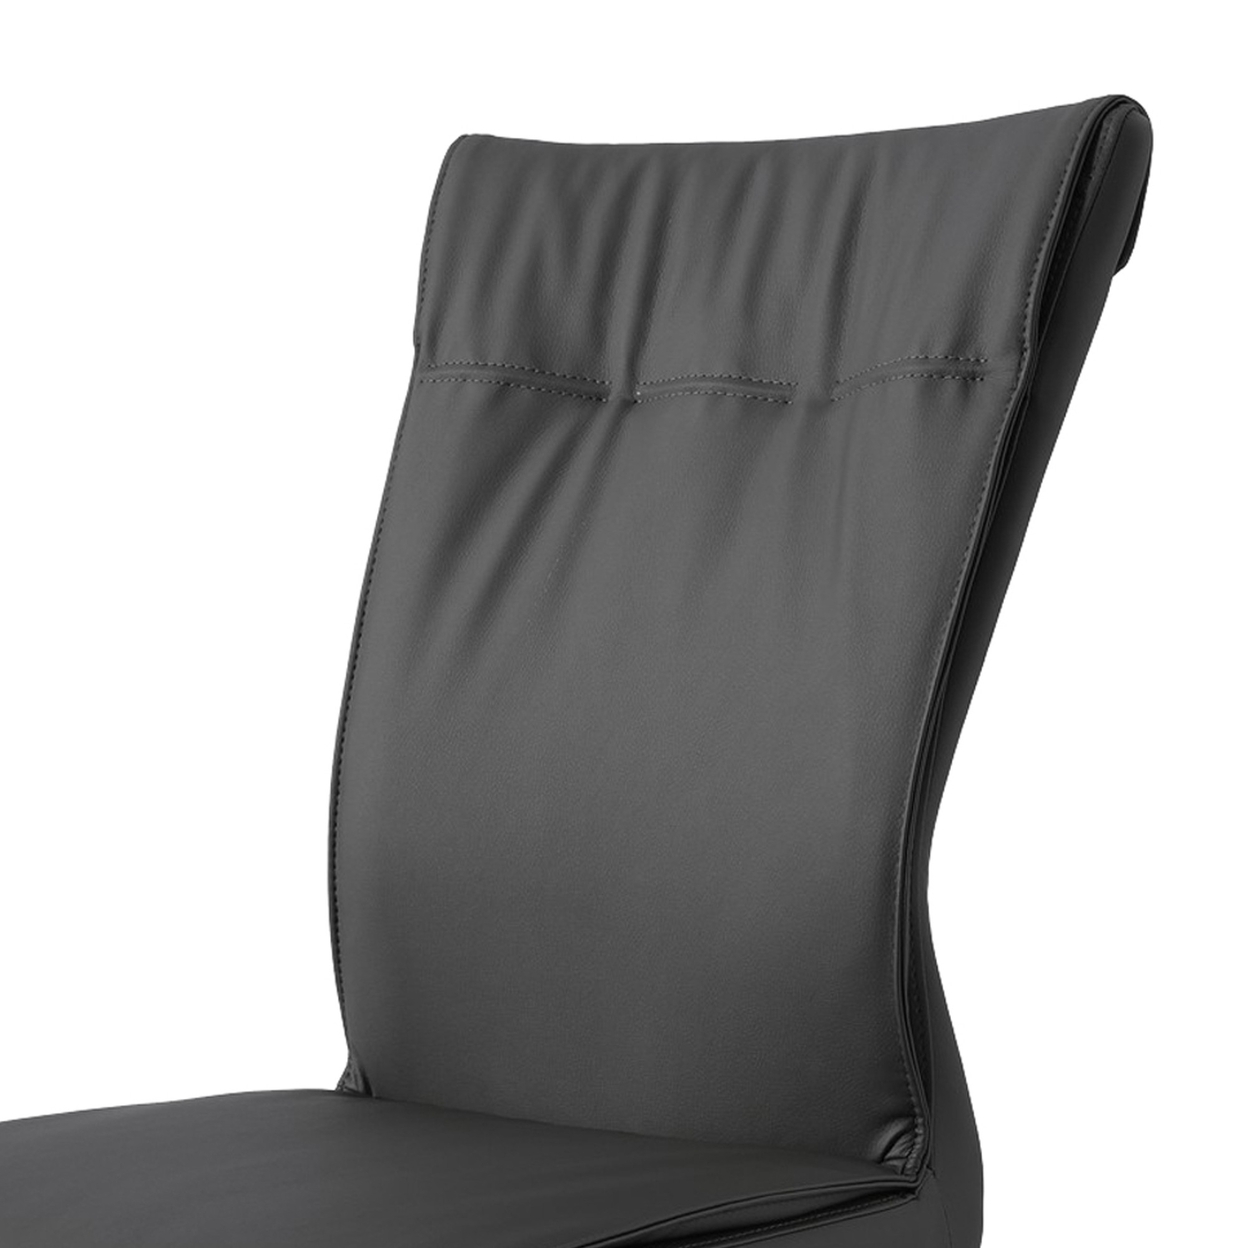 Leatherette Dining Chair With Breuer Style, Set Of 2, Dark Gray - Saltoro Sherpi